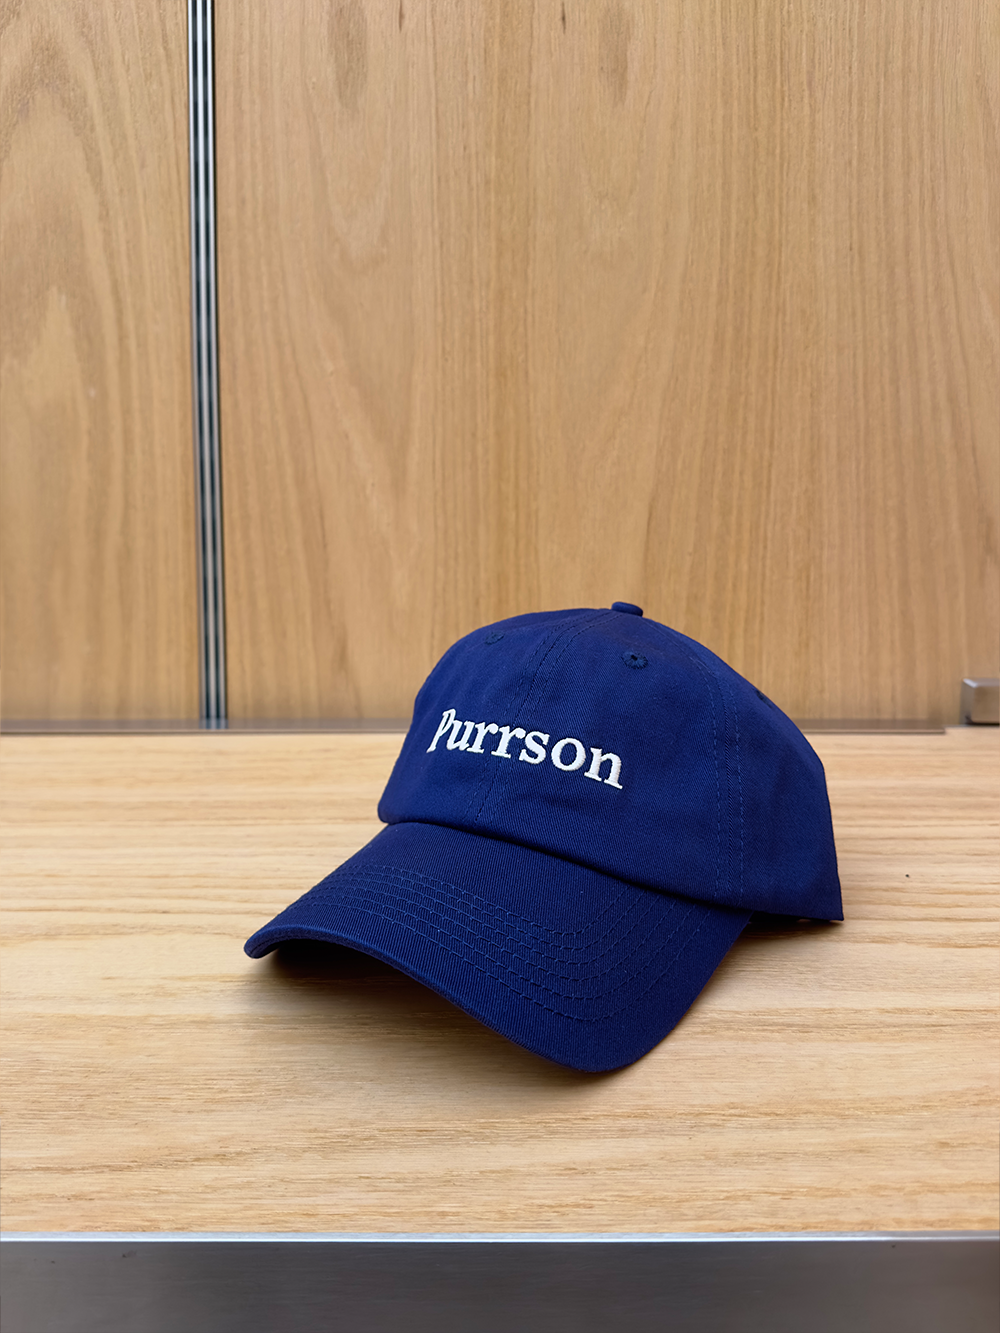 Purrson Embroidered Cap